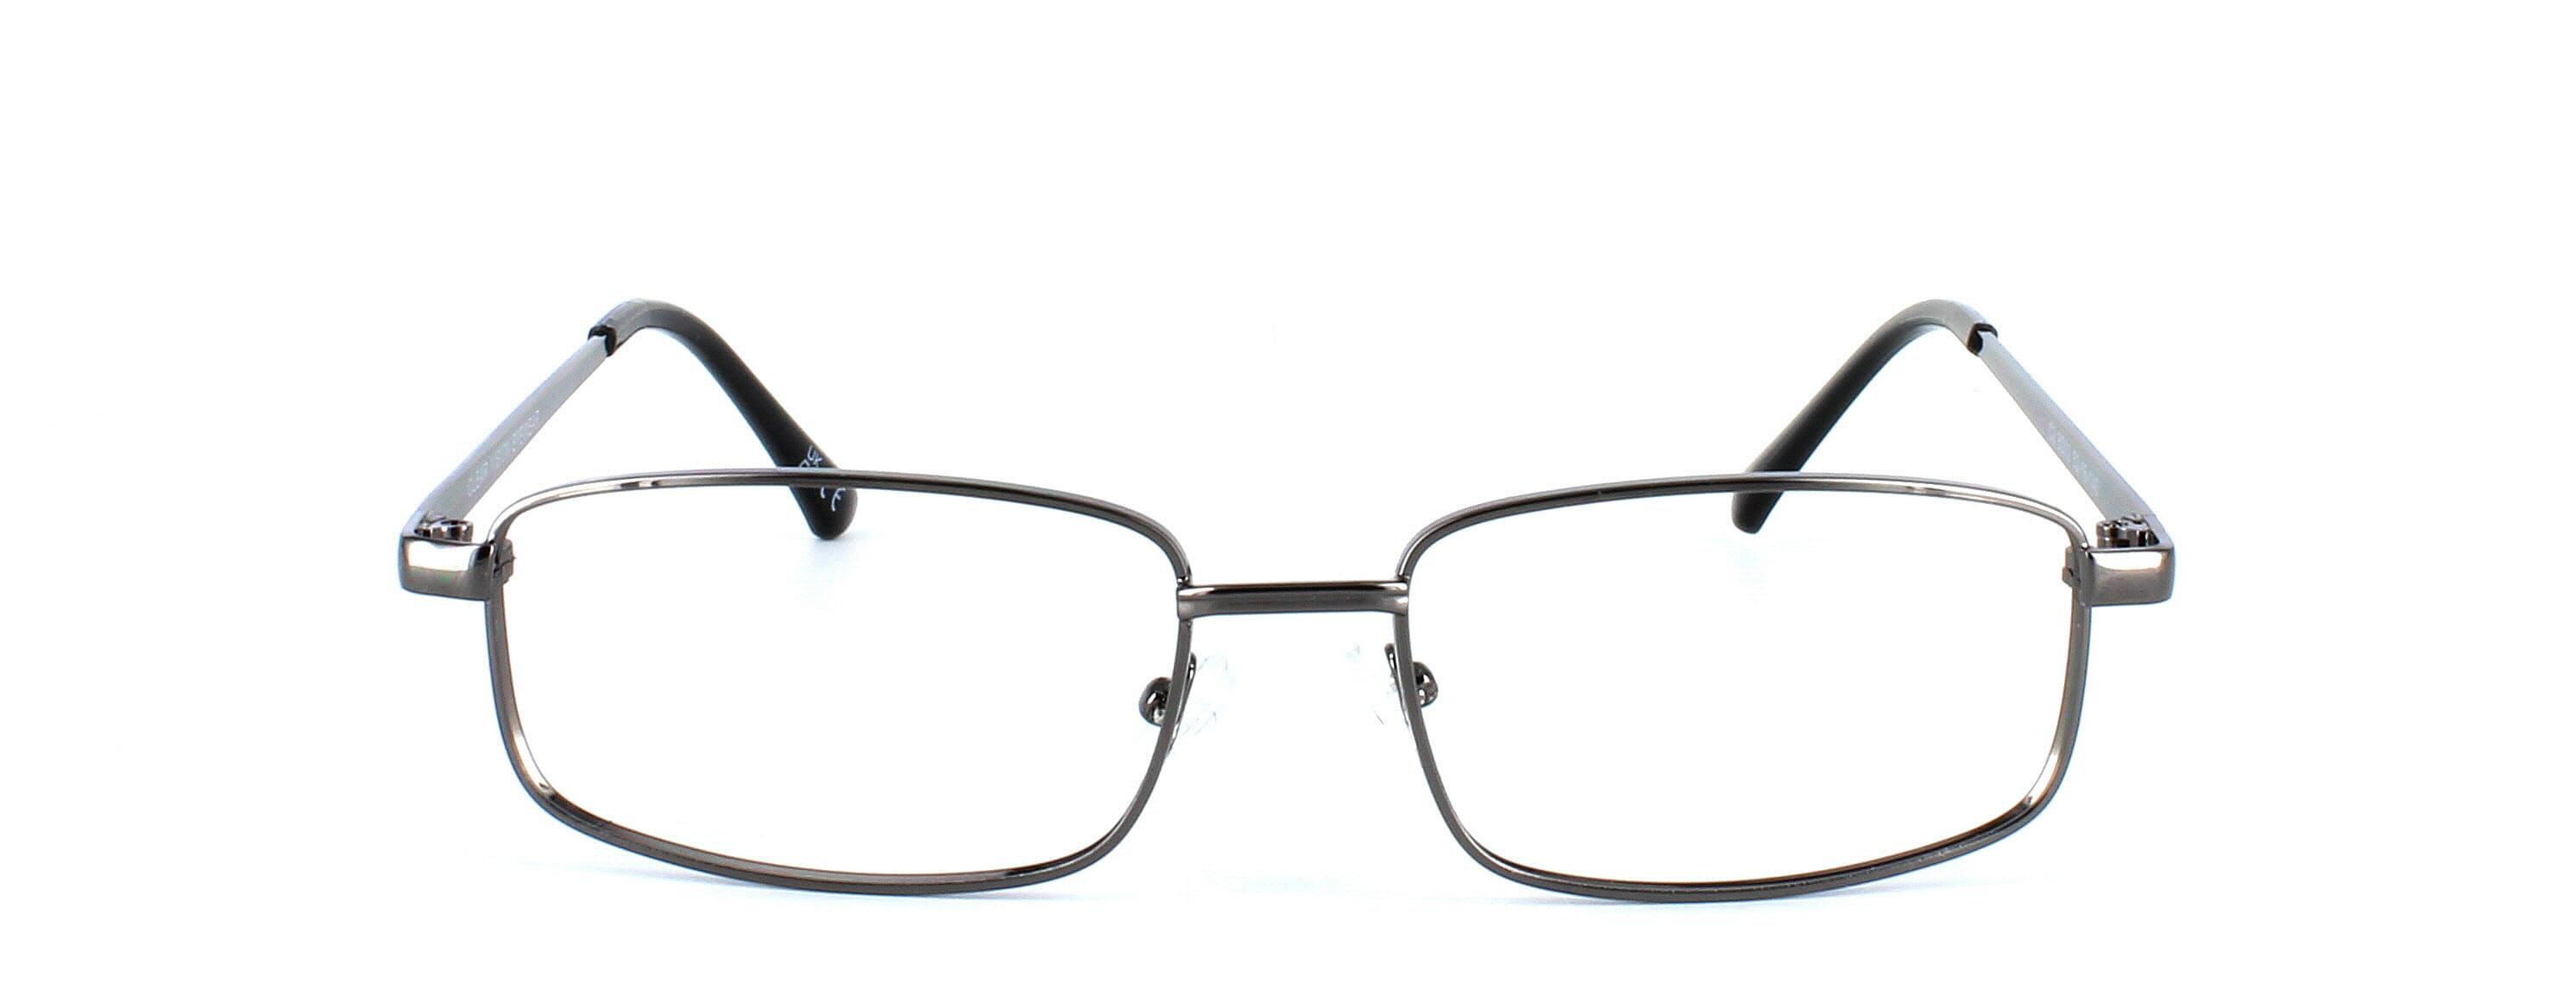 Verwood - Gents full-rim metal glasses here in gunmetal - image view 2